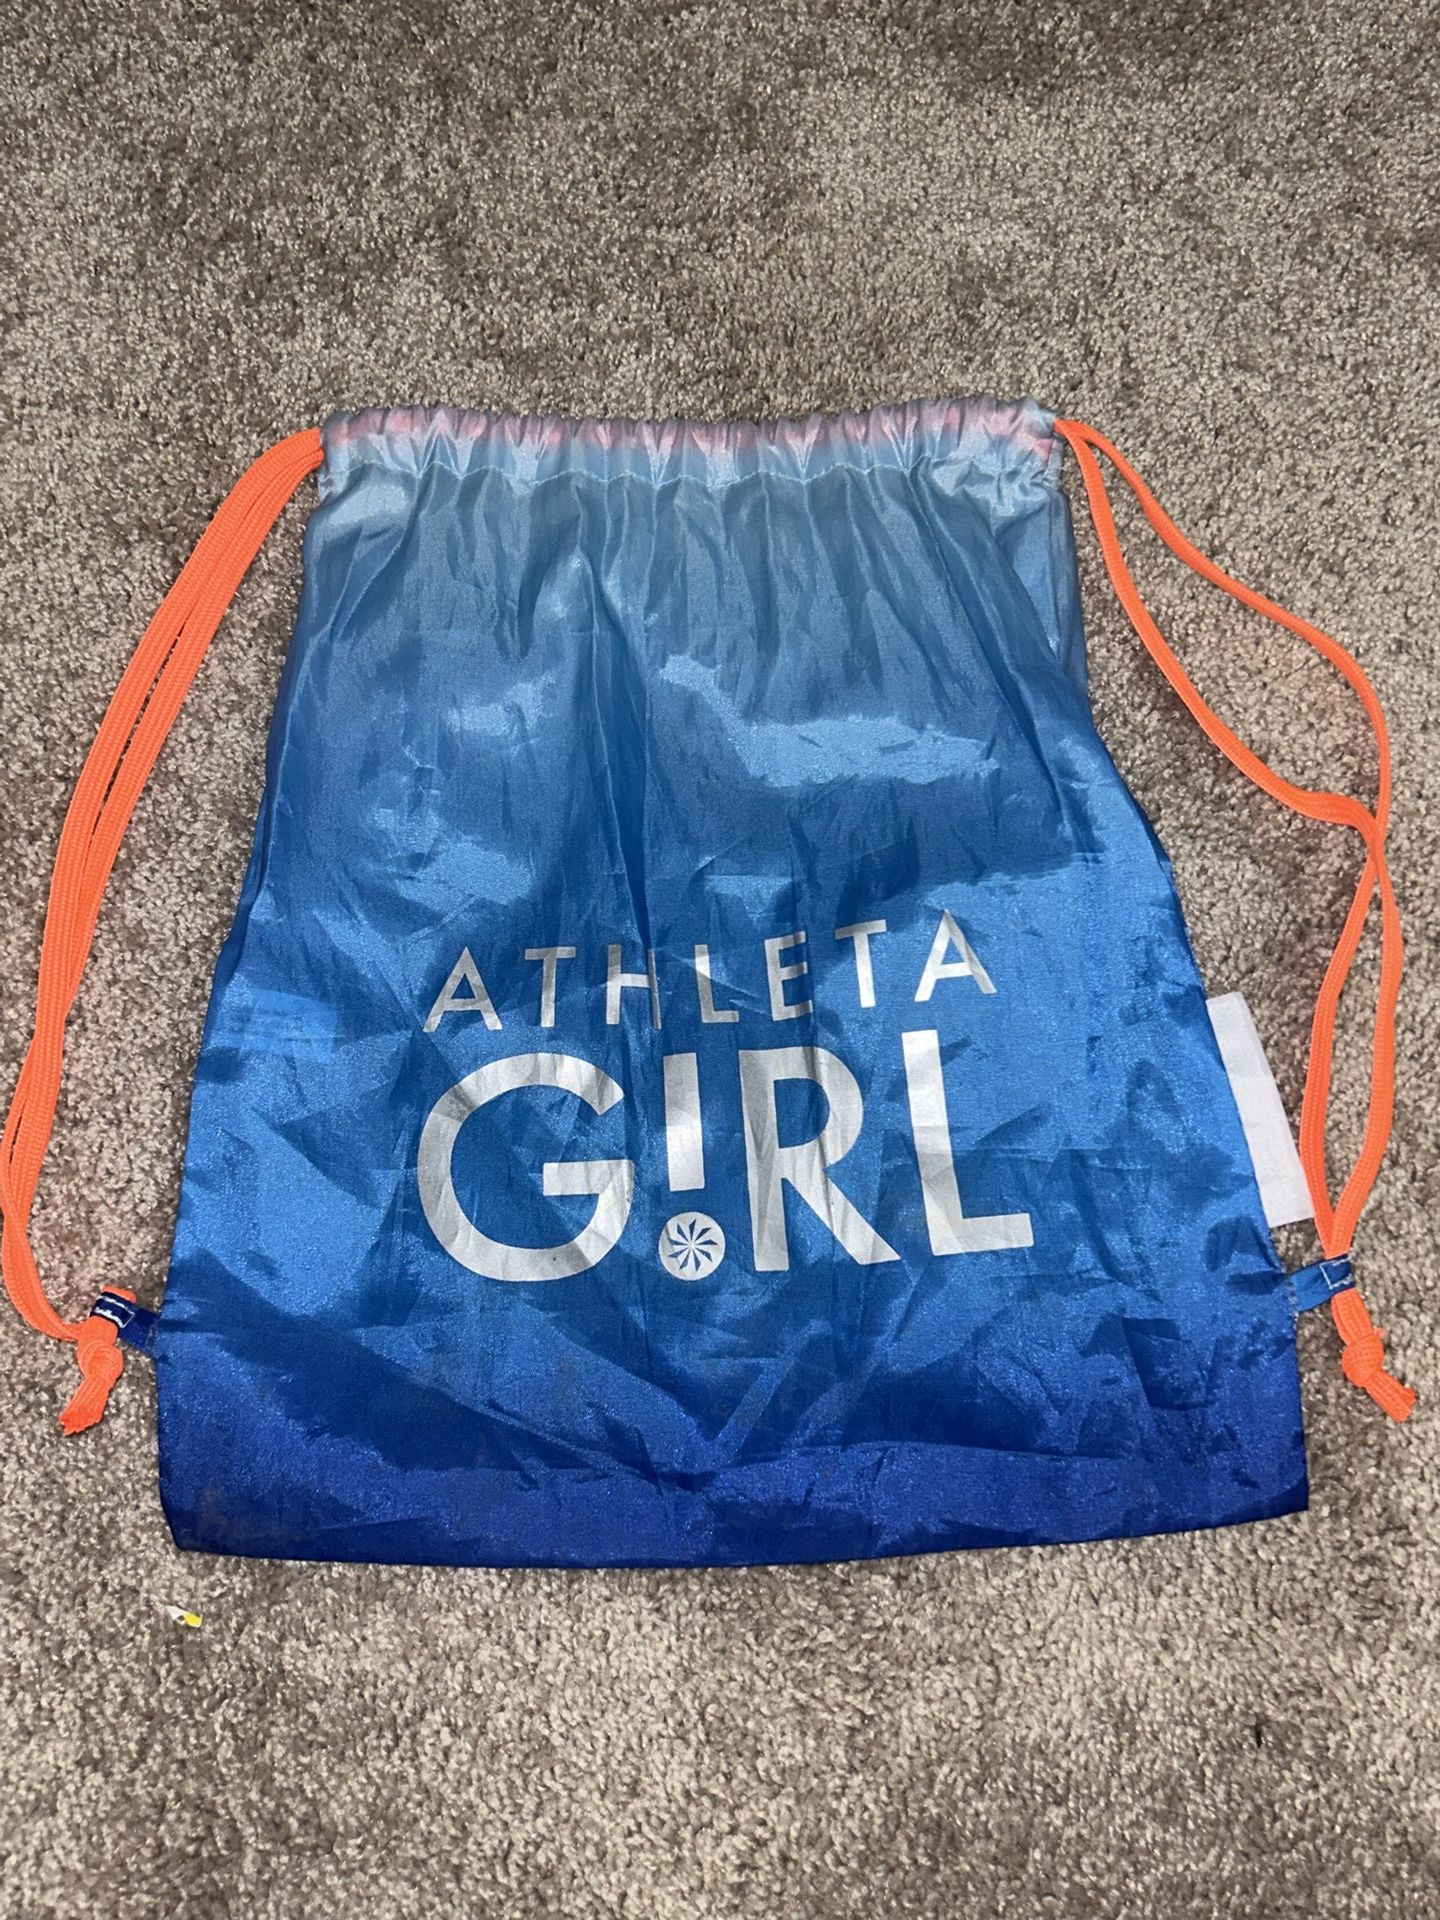 Athleta Girl Drawstring Bag - Like New